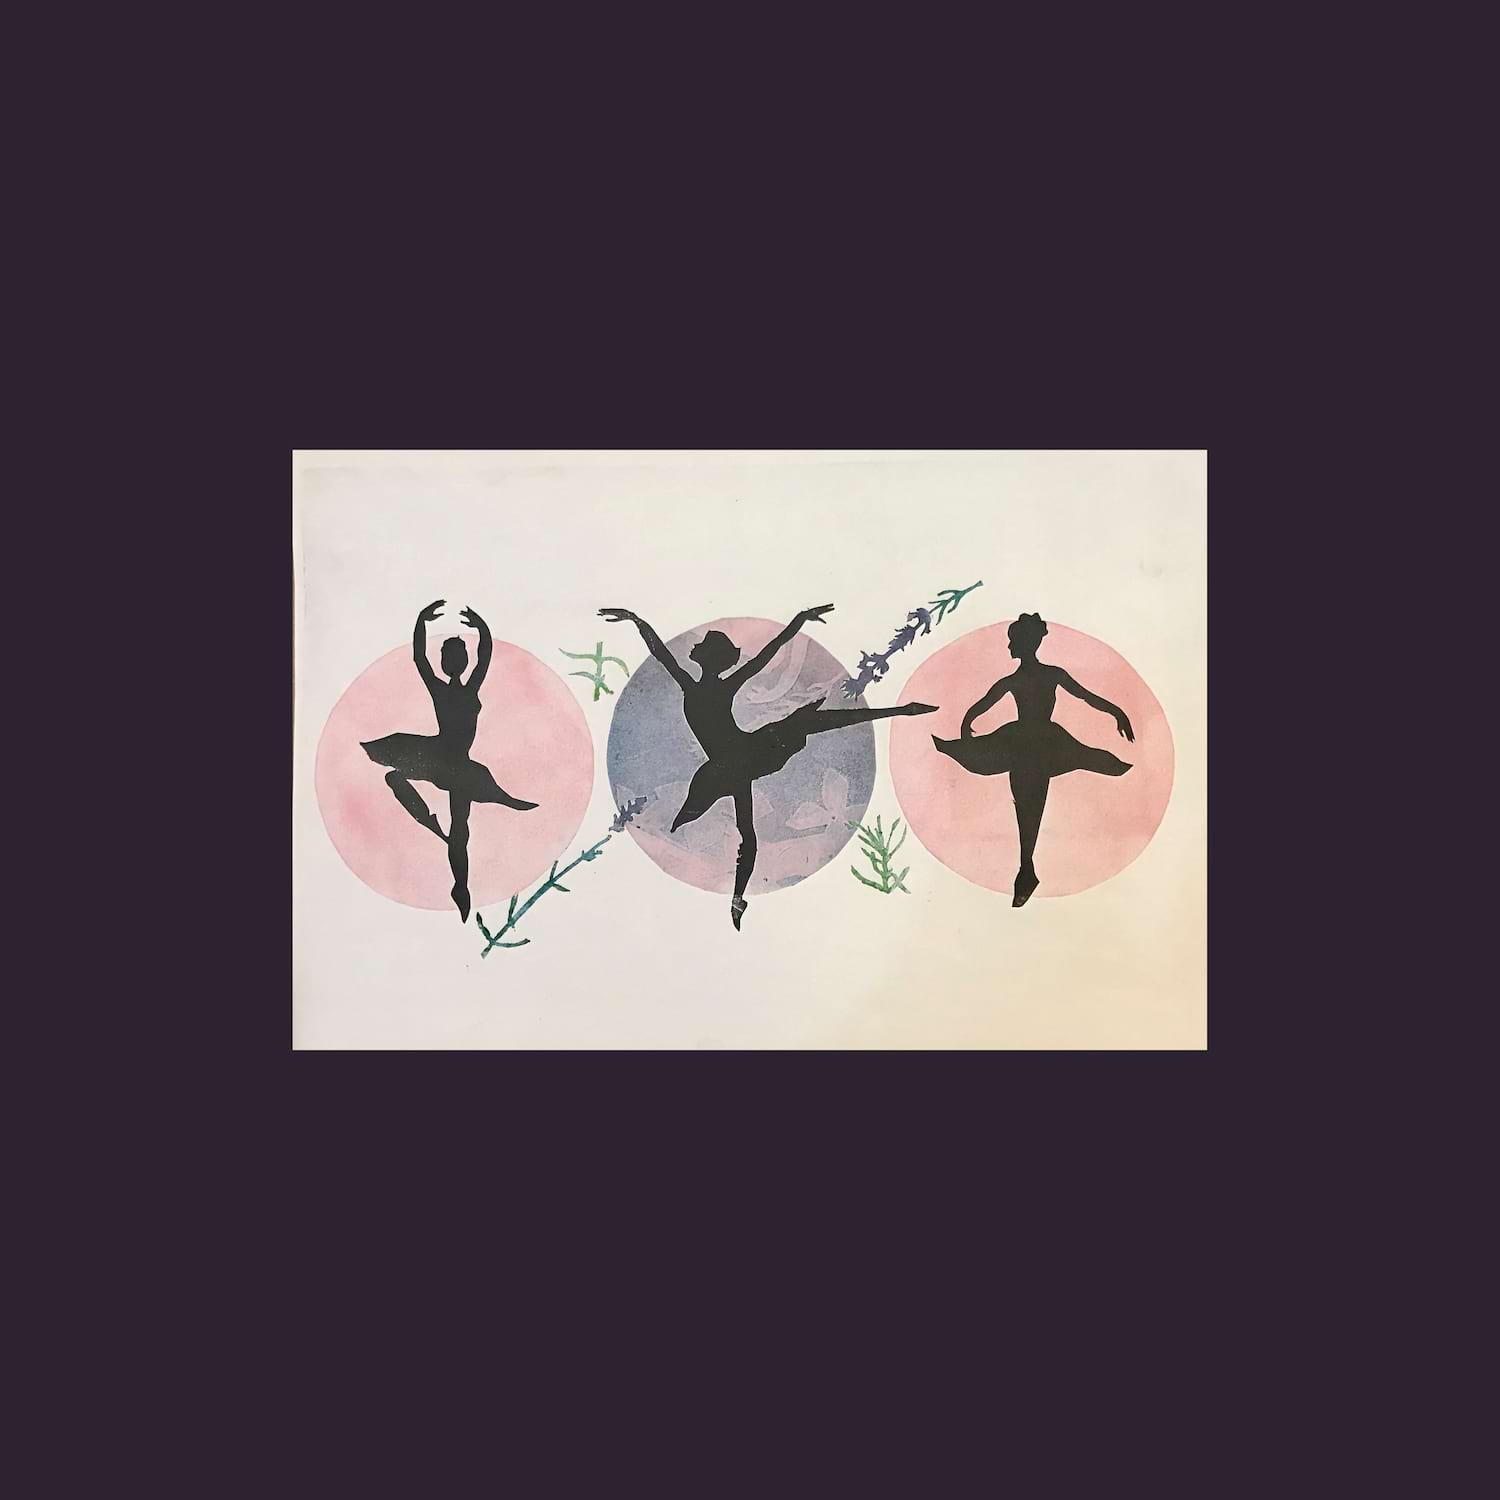  Alysse Machalek. Dancers. Pochoir print. 2020.